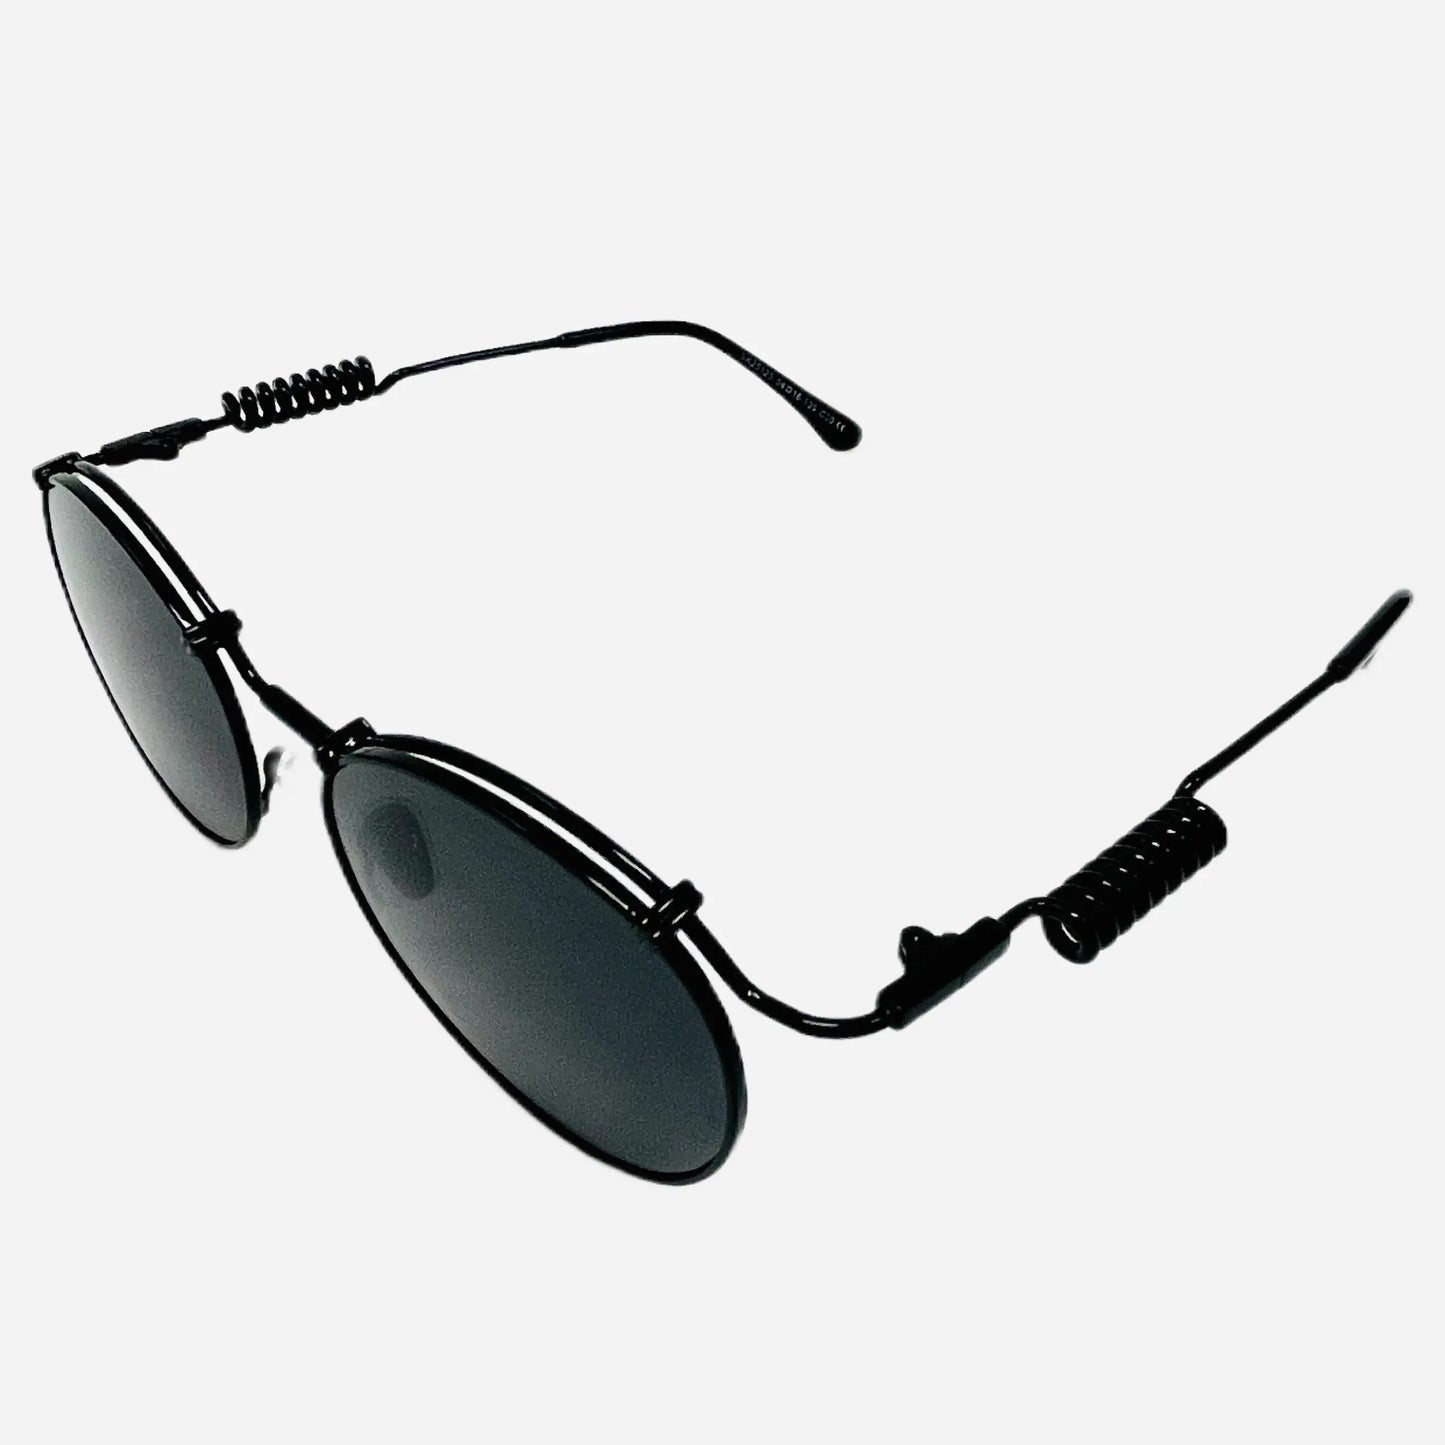 Vintage-Jean-Paul-Gaultier-Sonnenbrille-Sunglasses-Model-56-9174-black-front-side